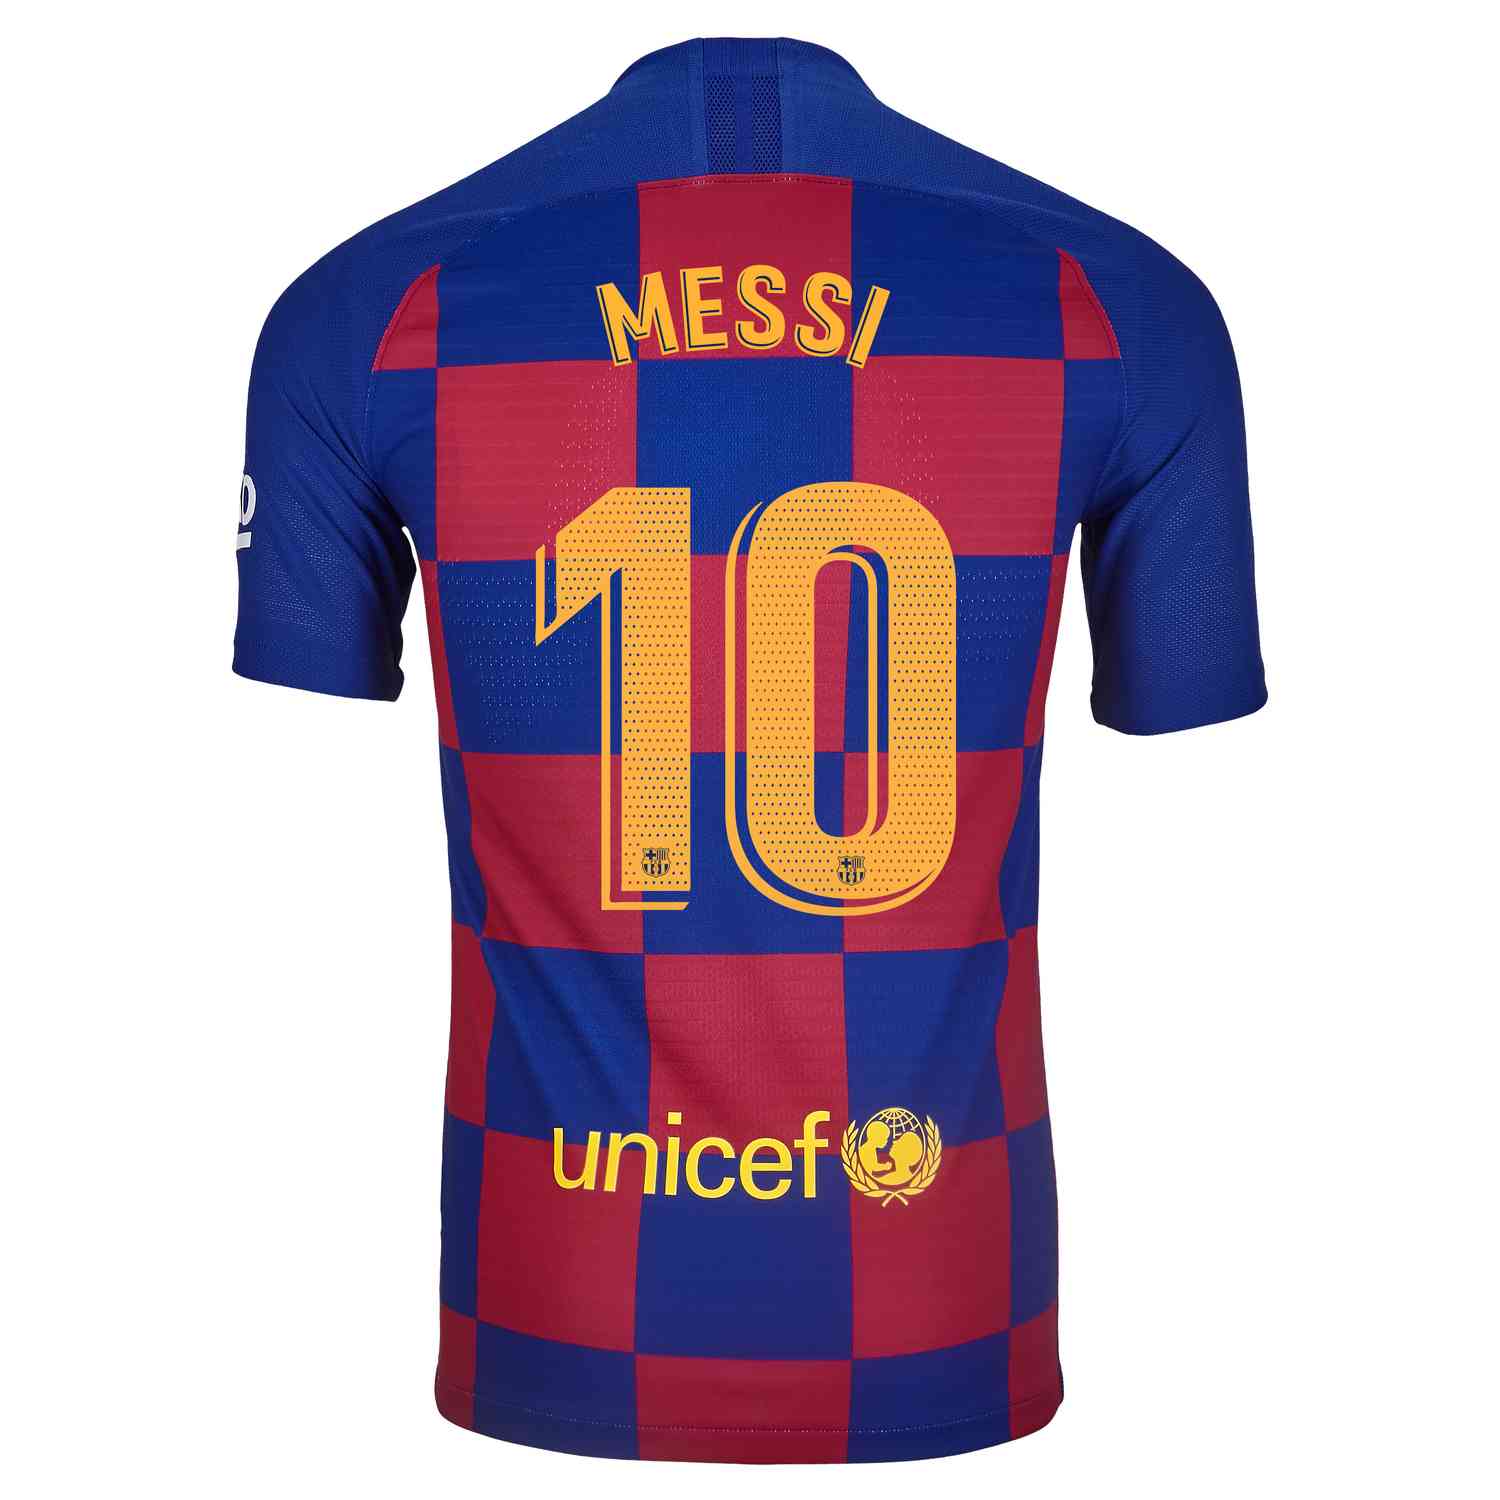 Messi Jersey / Messi Barcelona 2006 2007 Jersey Shirt Camiseta M BNWT ...